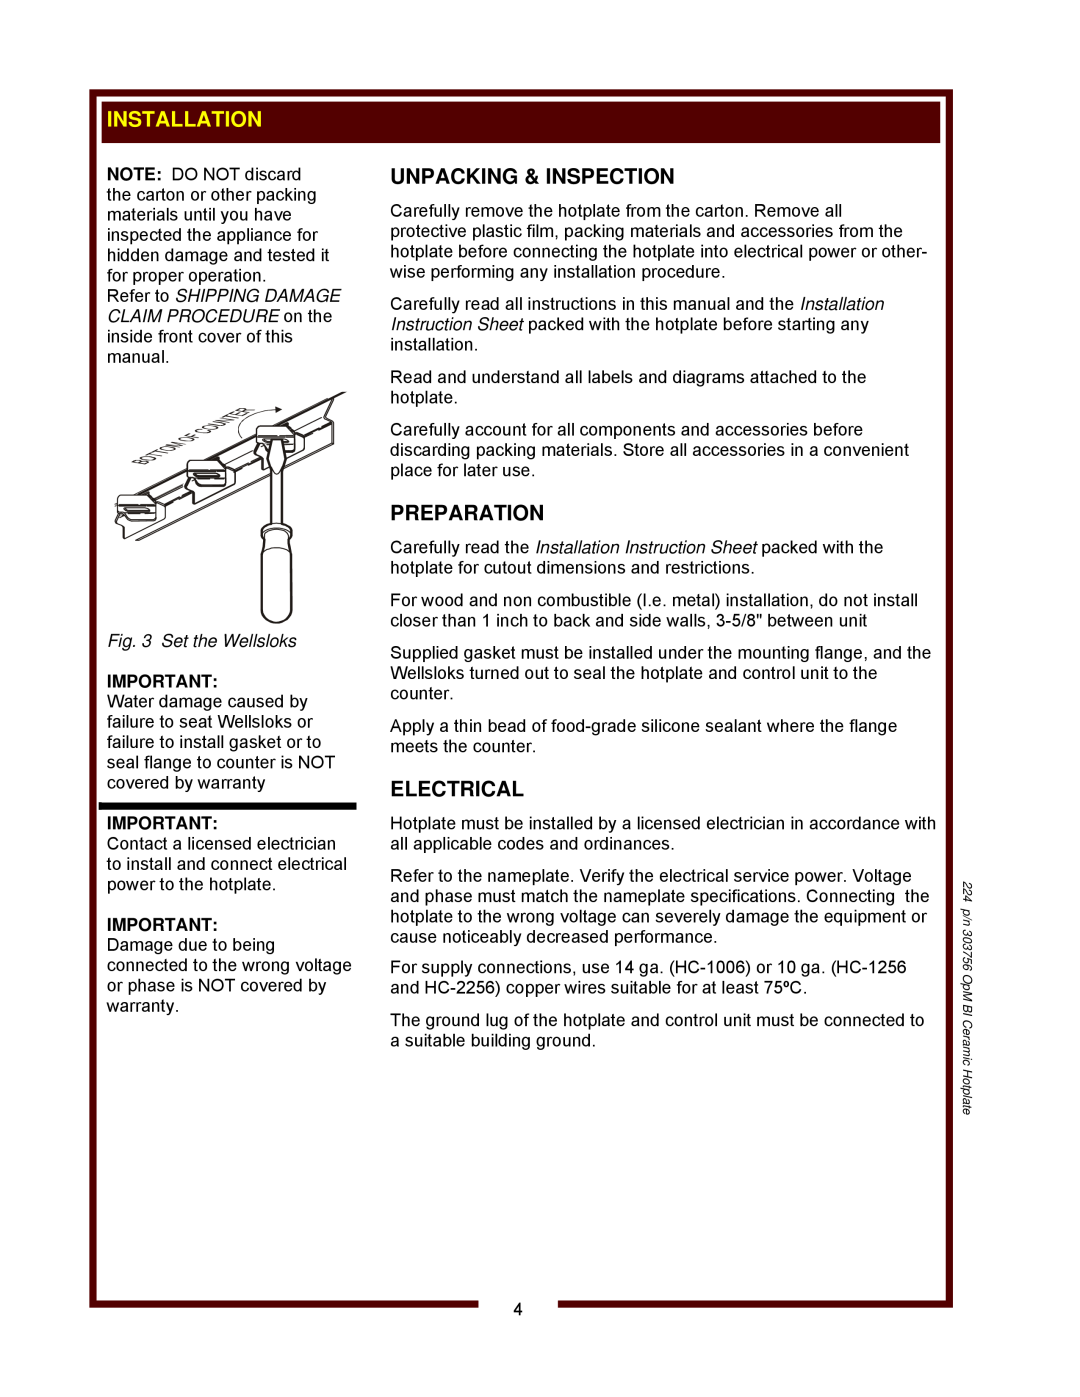 Wells HC-1006 operation manual 224 p/n 303756 OpM BI Ceramic Hotplate 